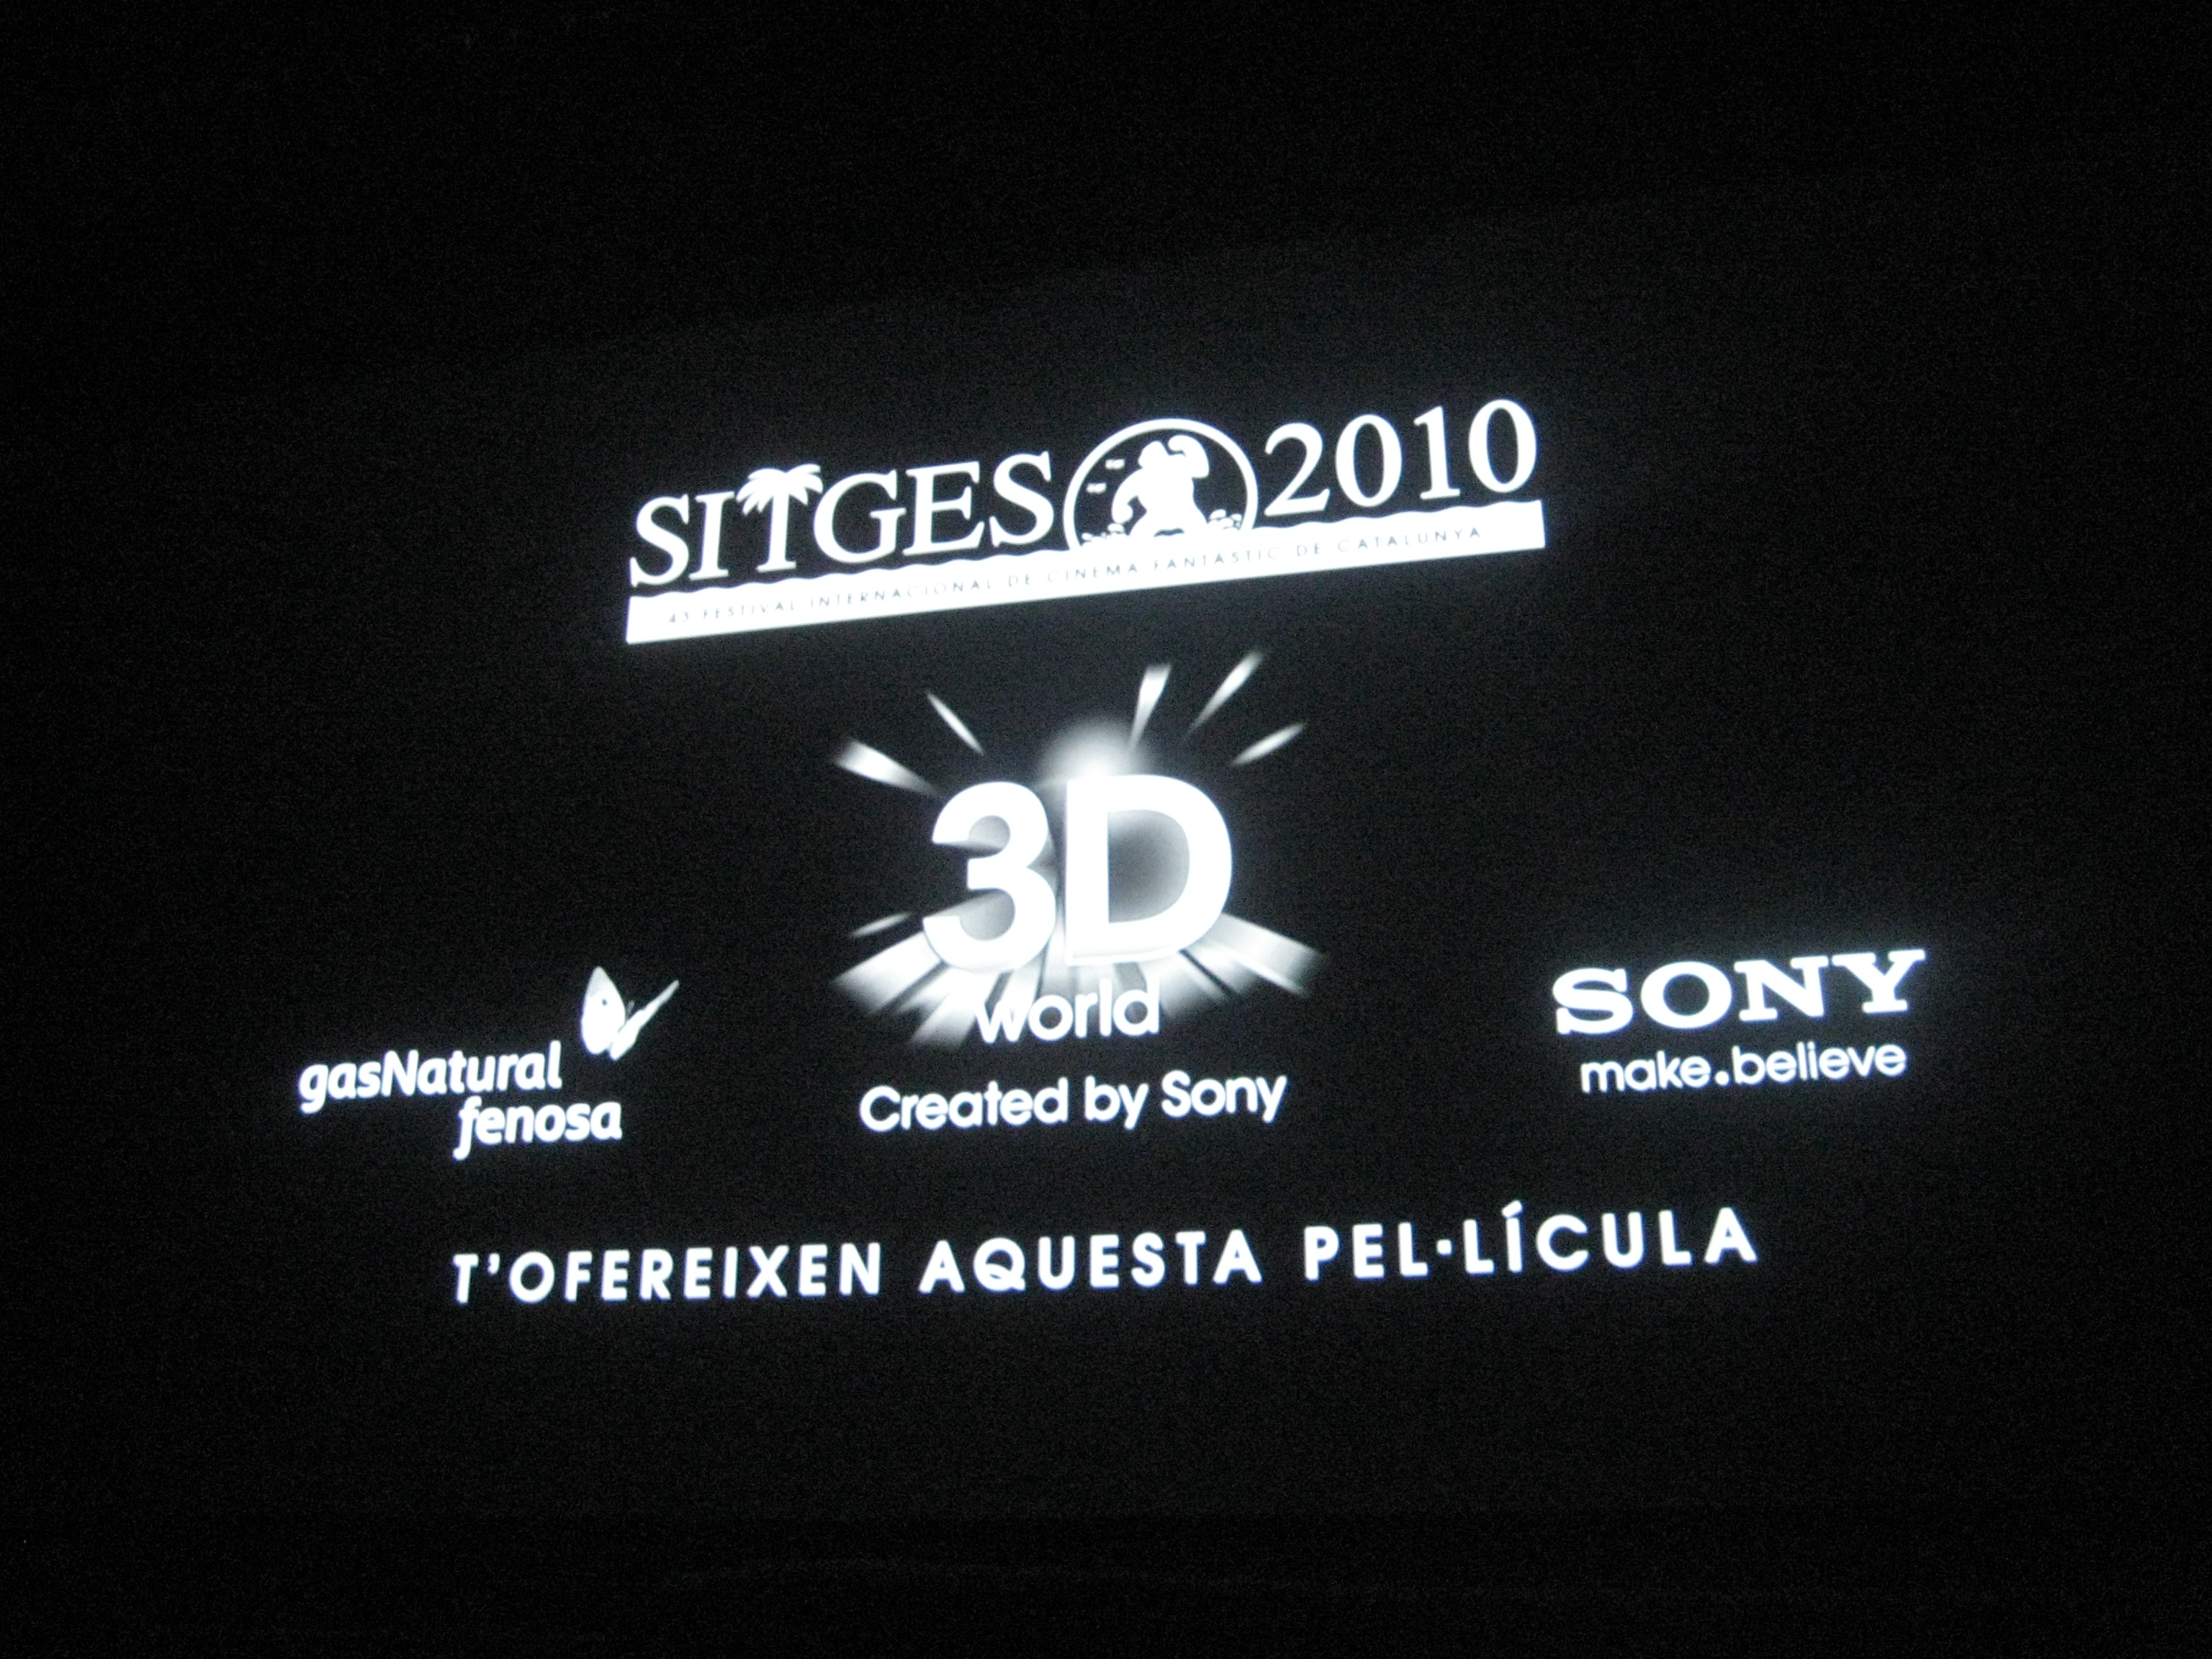 Sitges 2010